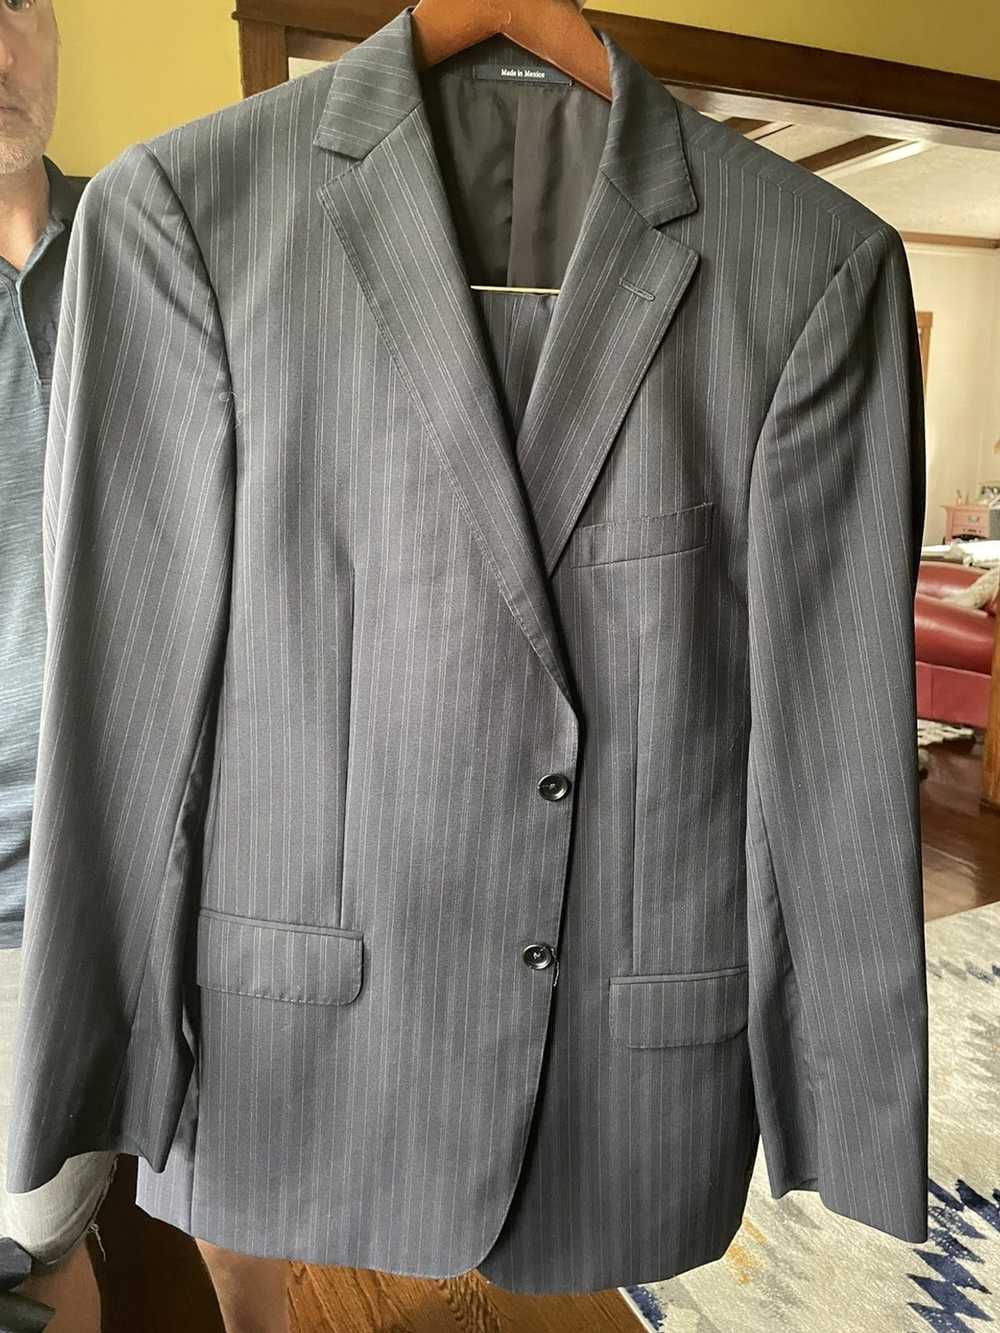 Z Zegna Zegna Navy Stripe Suit 40R 32 in waist - image 1